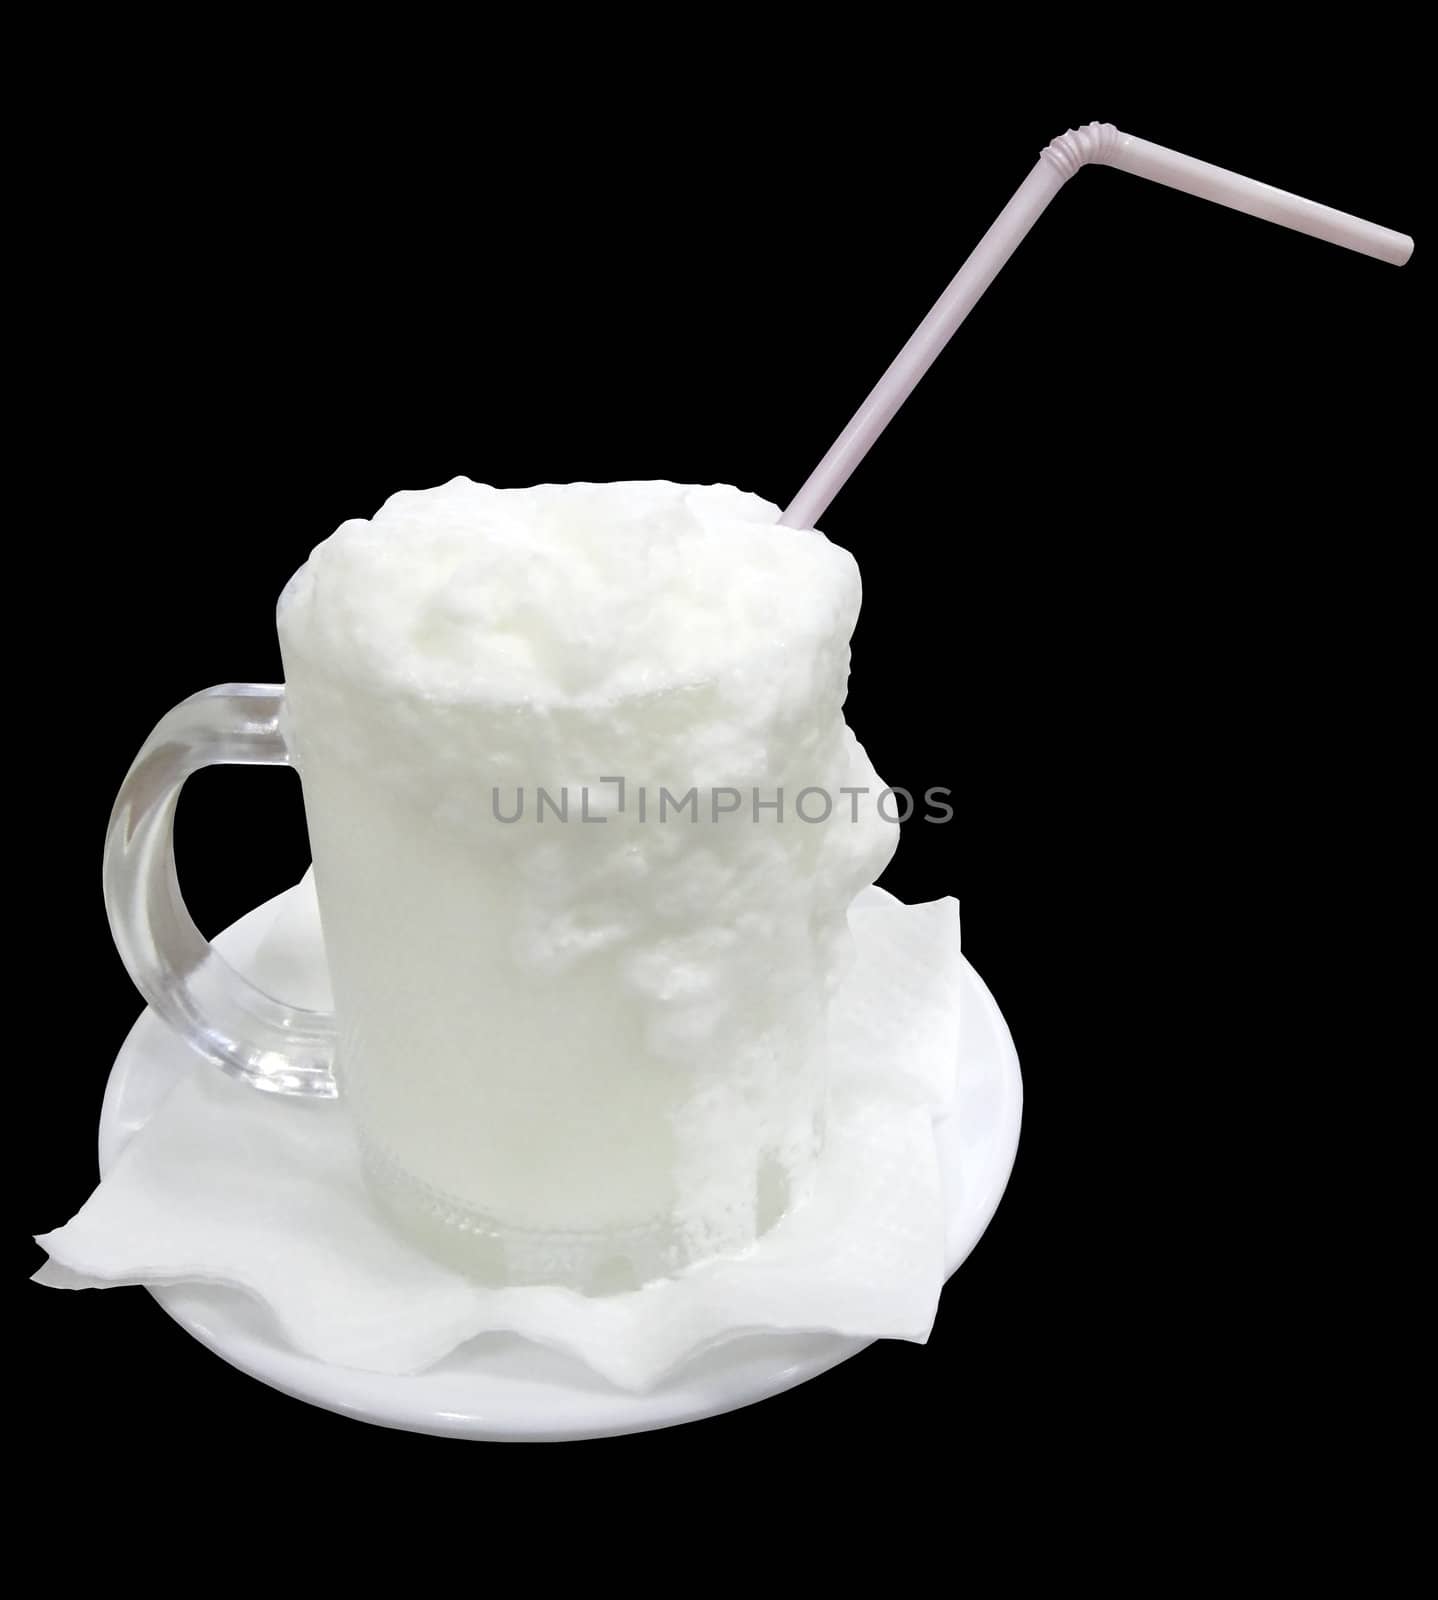 Susurluk buttermilk foamy   Isolated black background